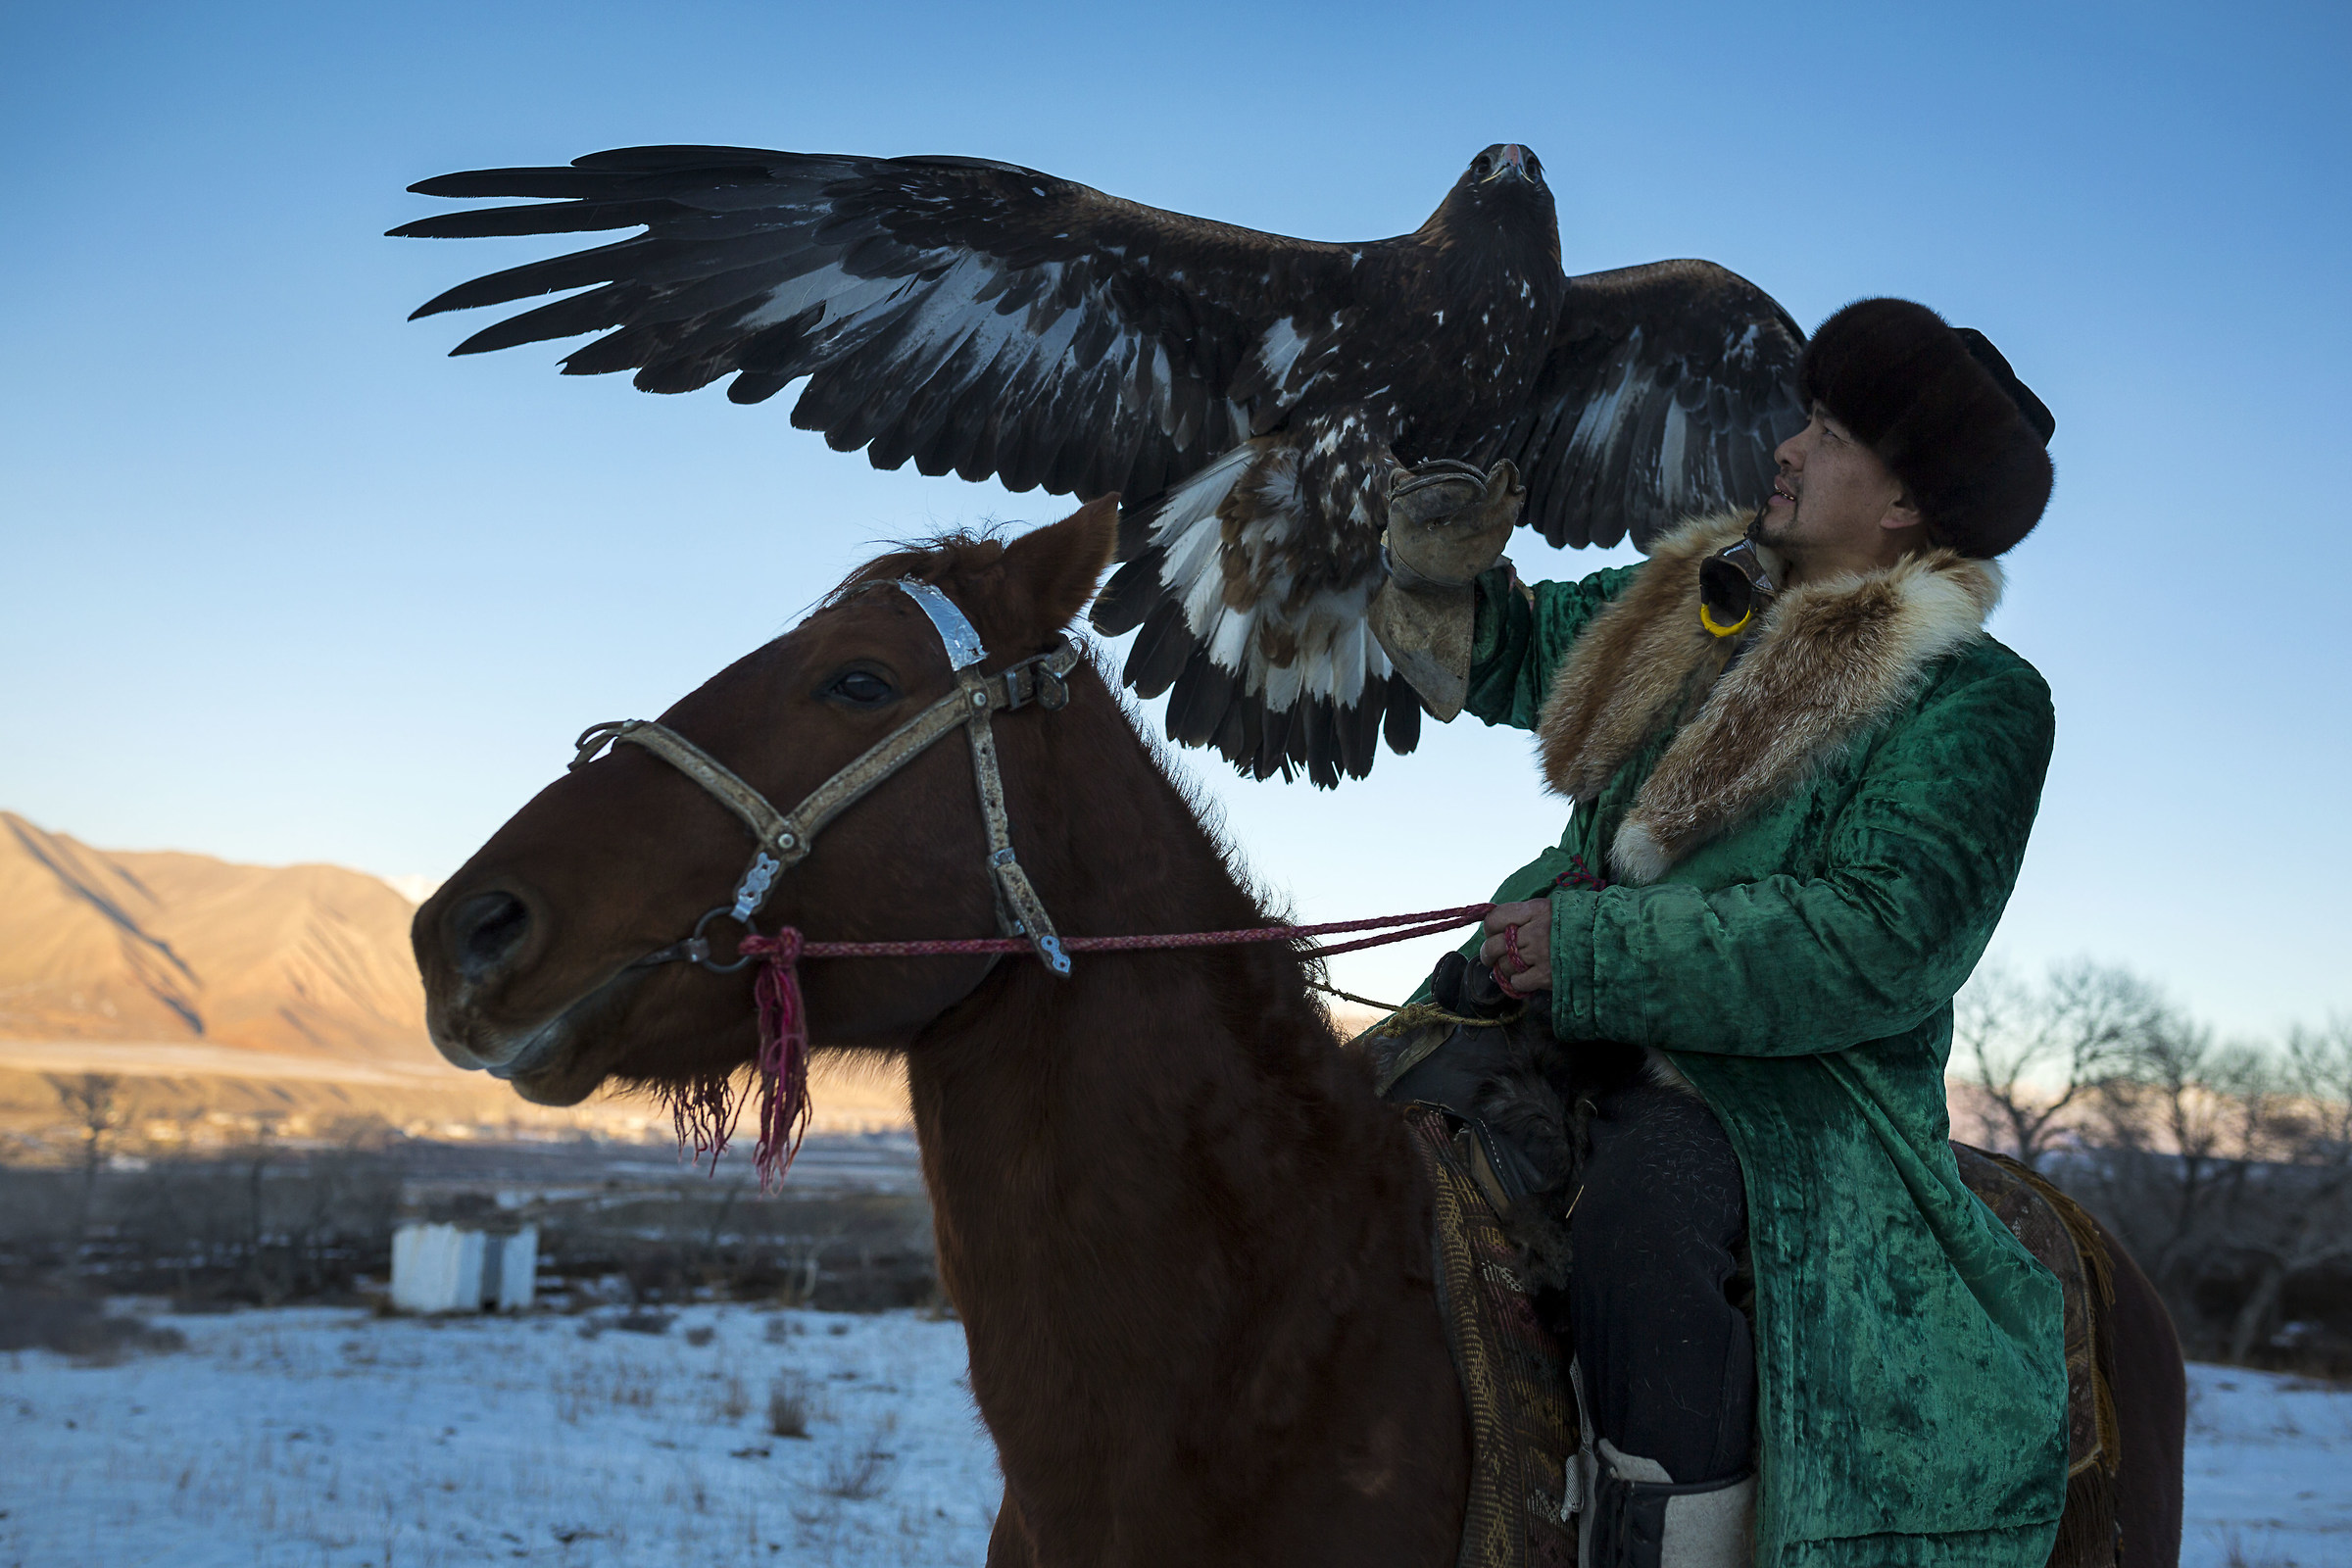 kyrgyz eagle hunter...